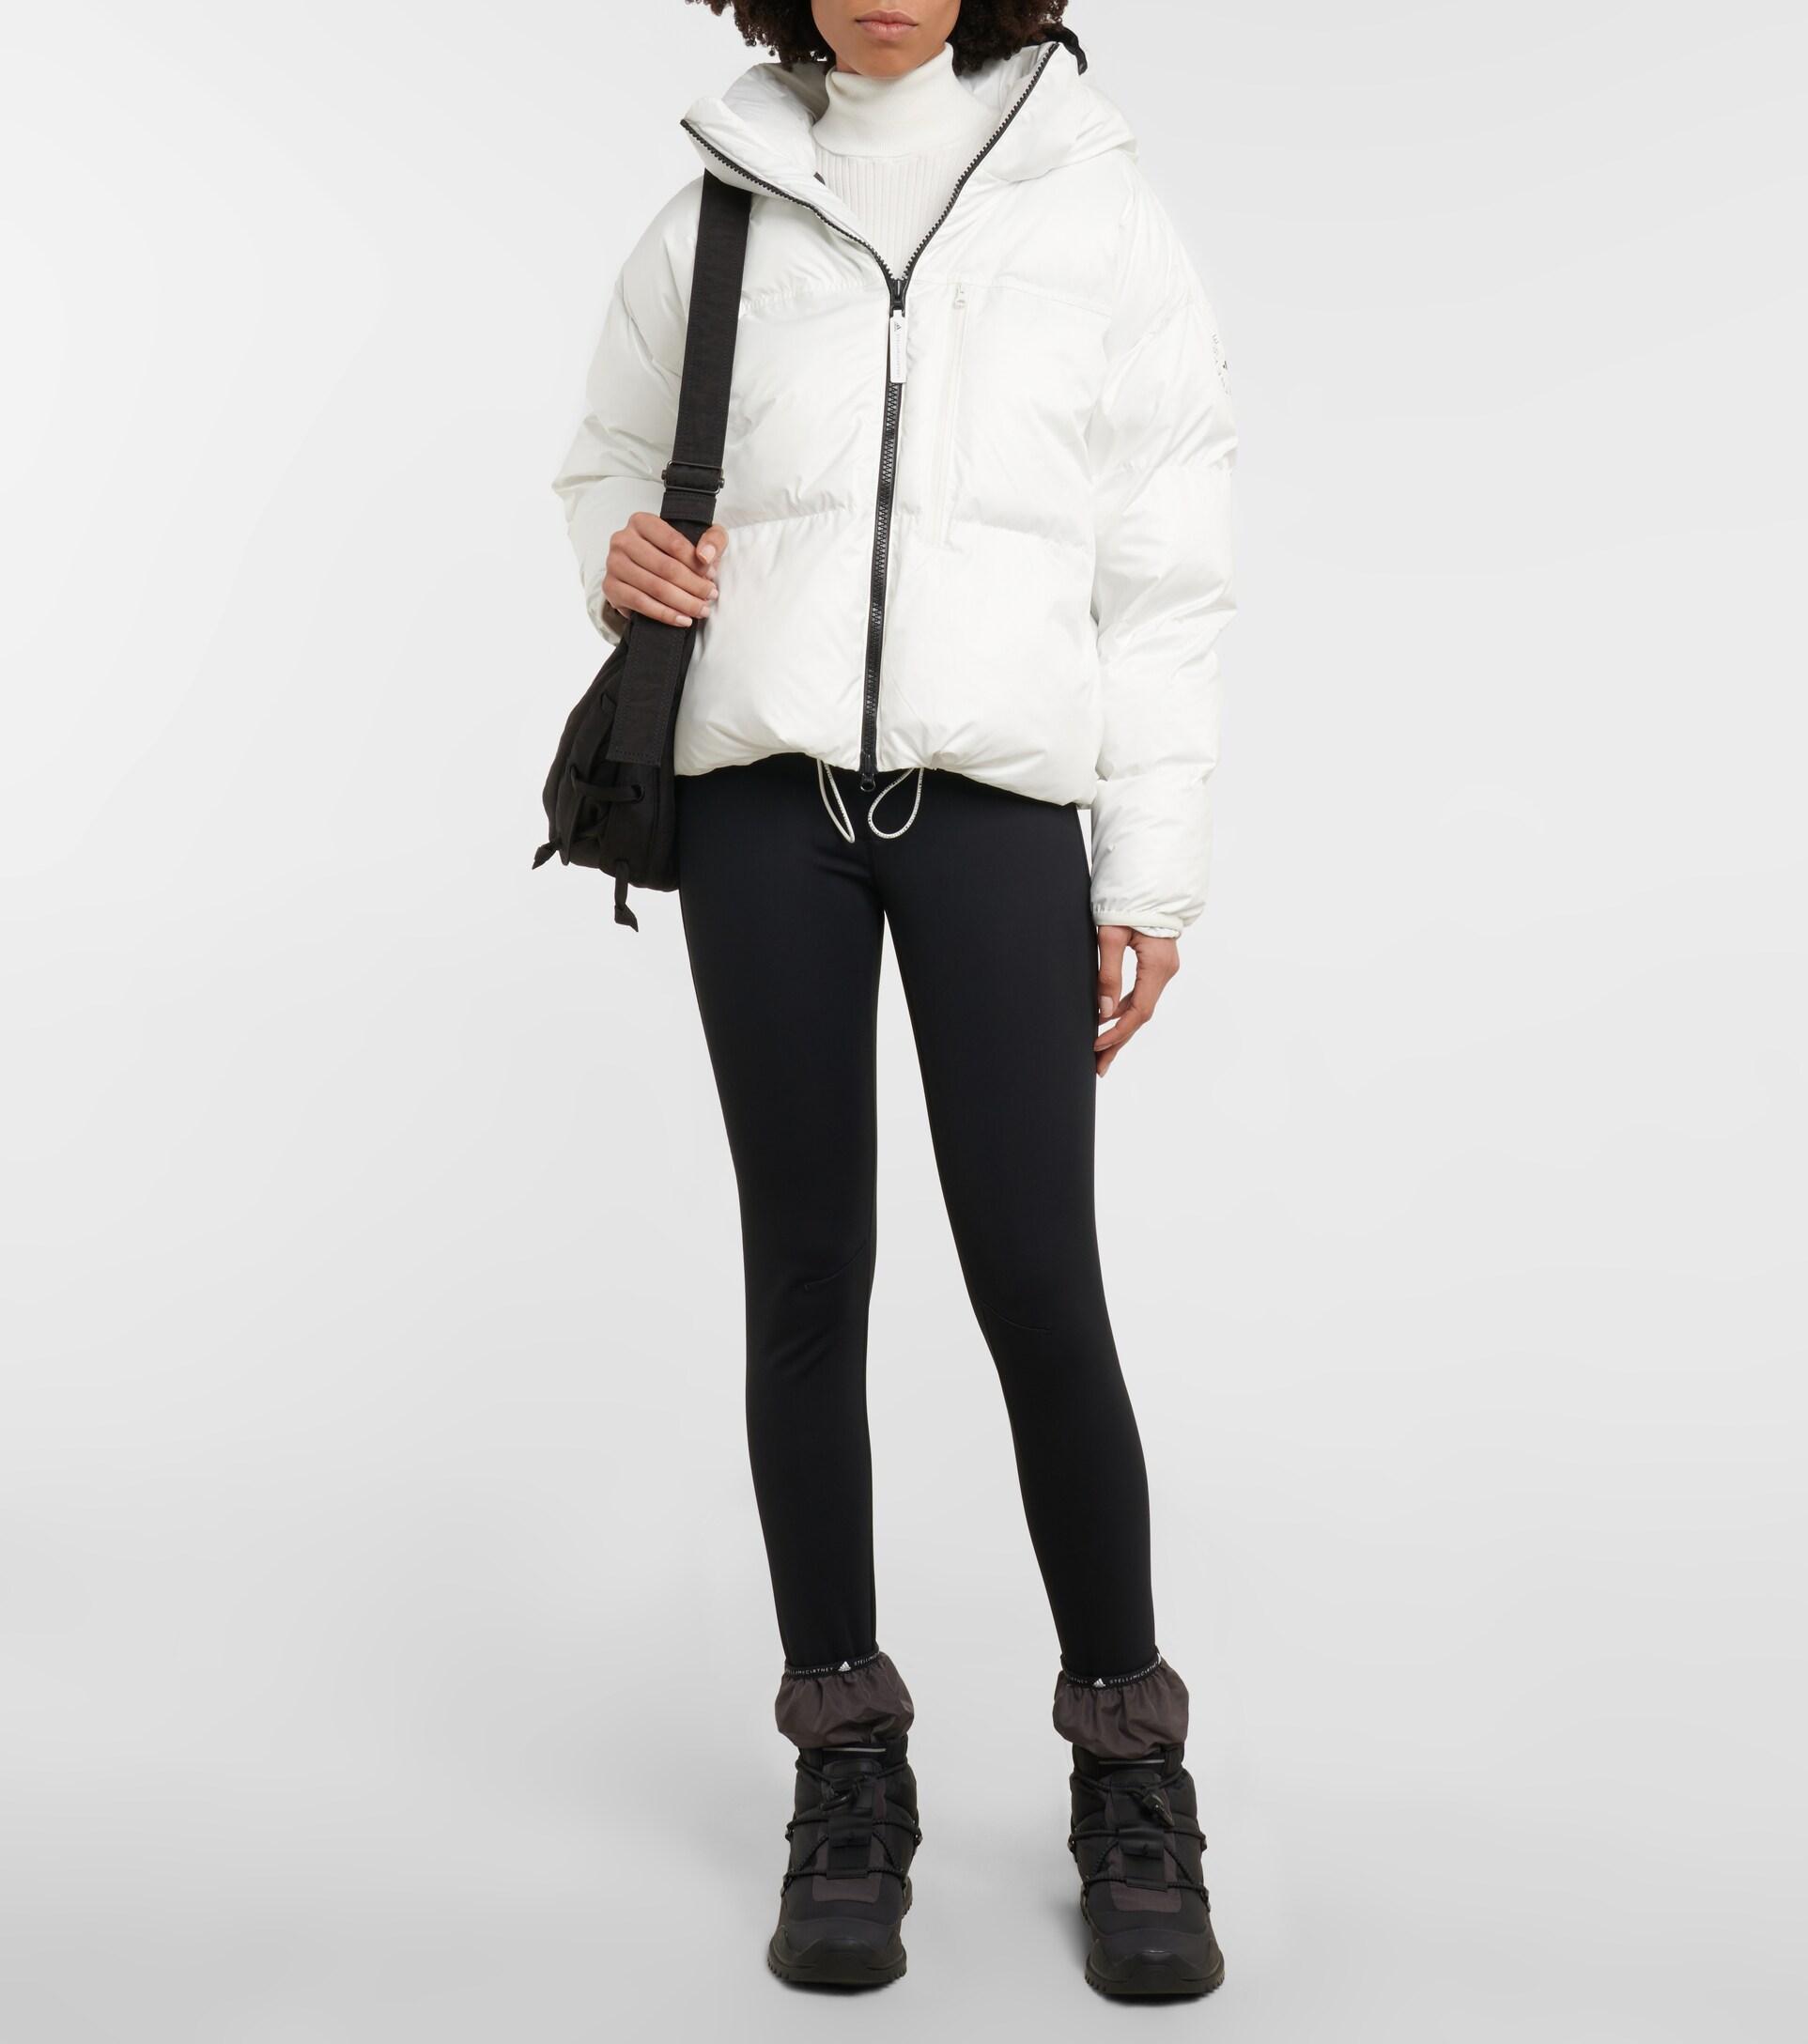 adidas By Stella McCartney Winter Snow Boots in Black | Lyst